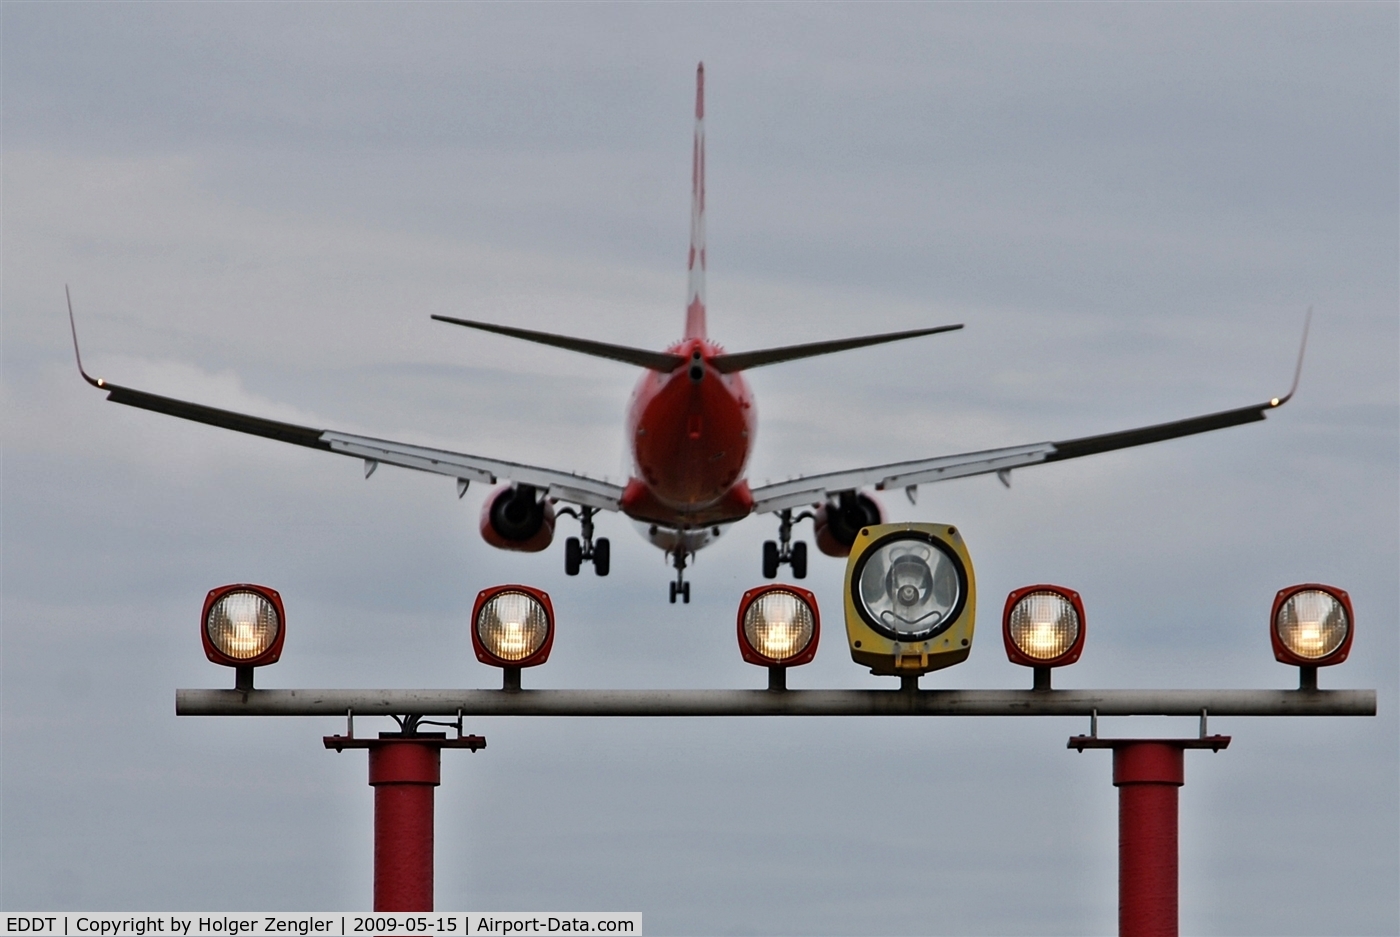 Tegel International Airport (closing in 2011), Berlin Germany (EDDT) - At photo position rwy 08R....